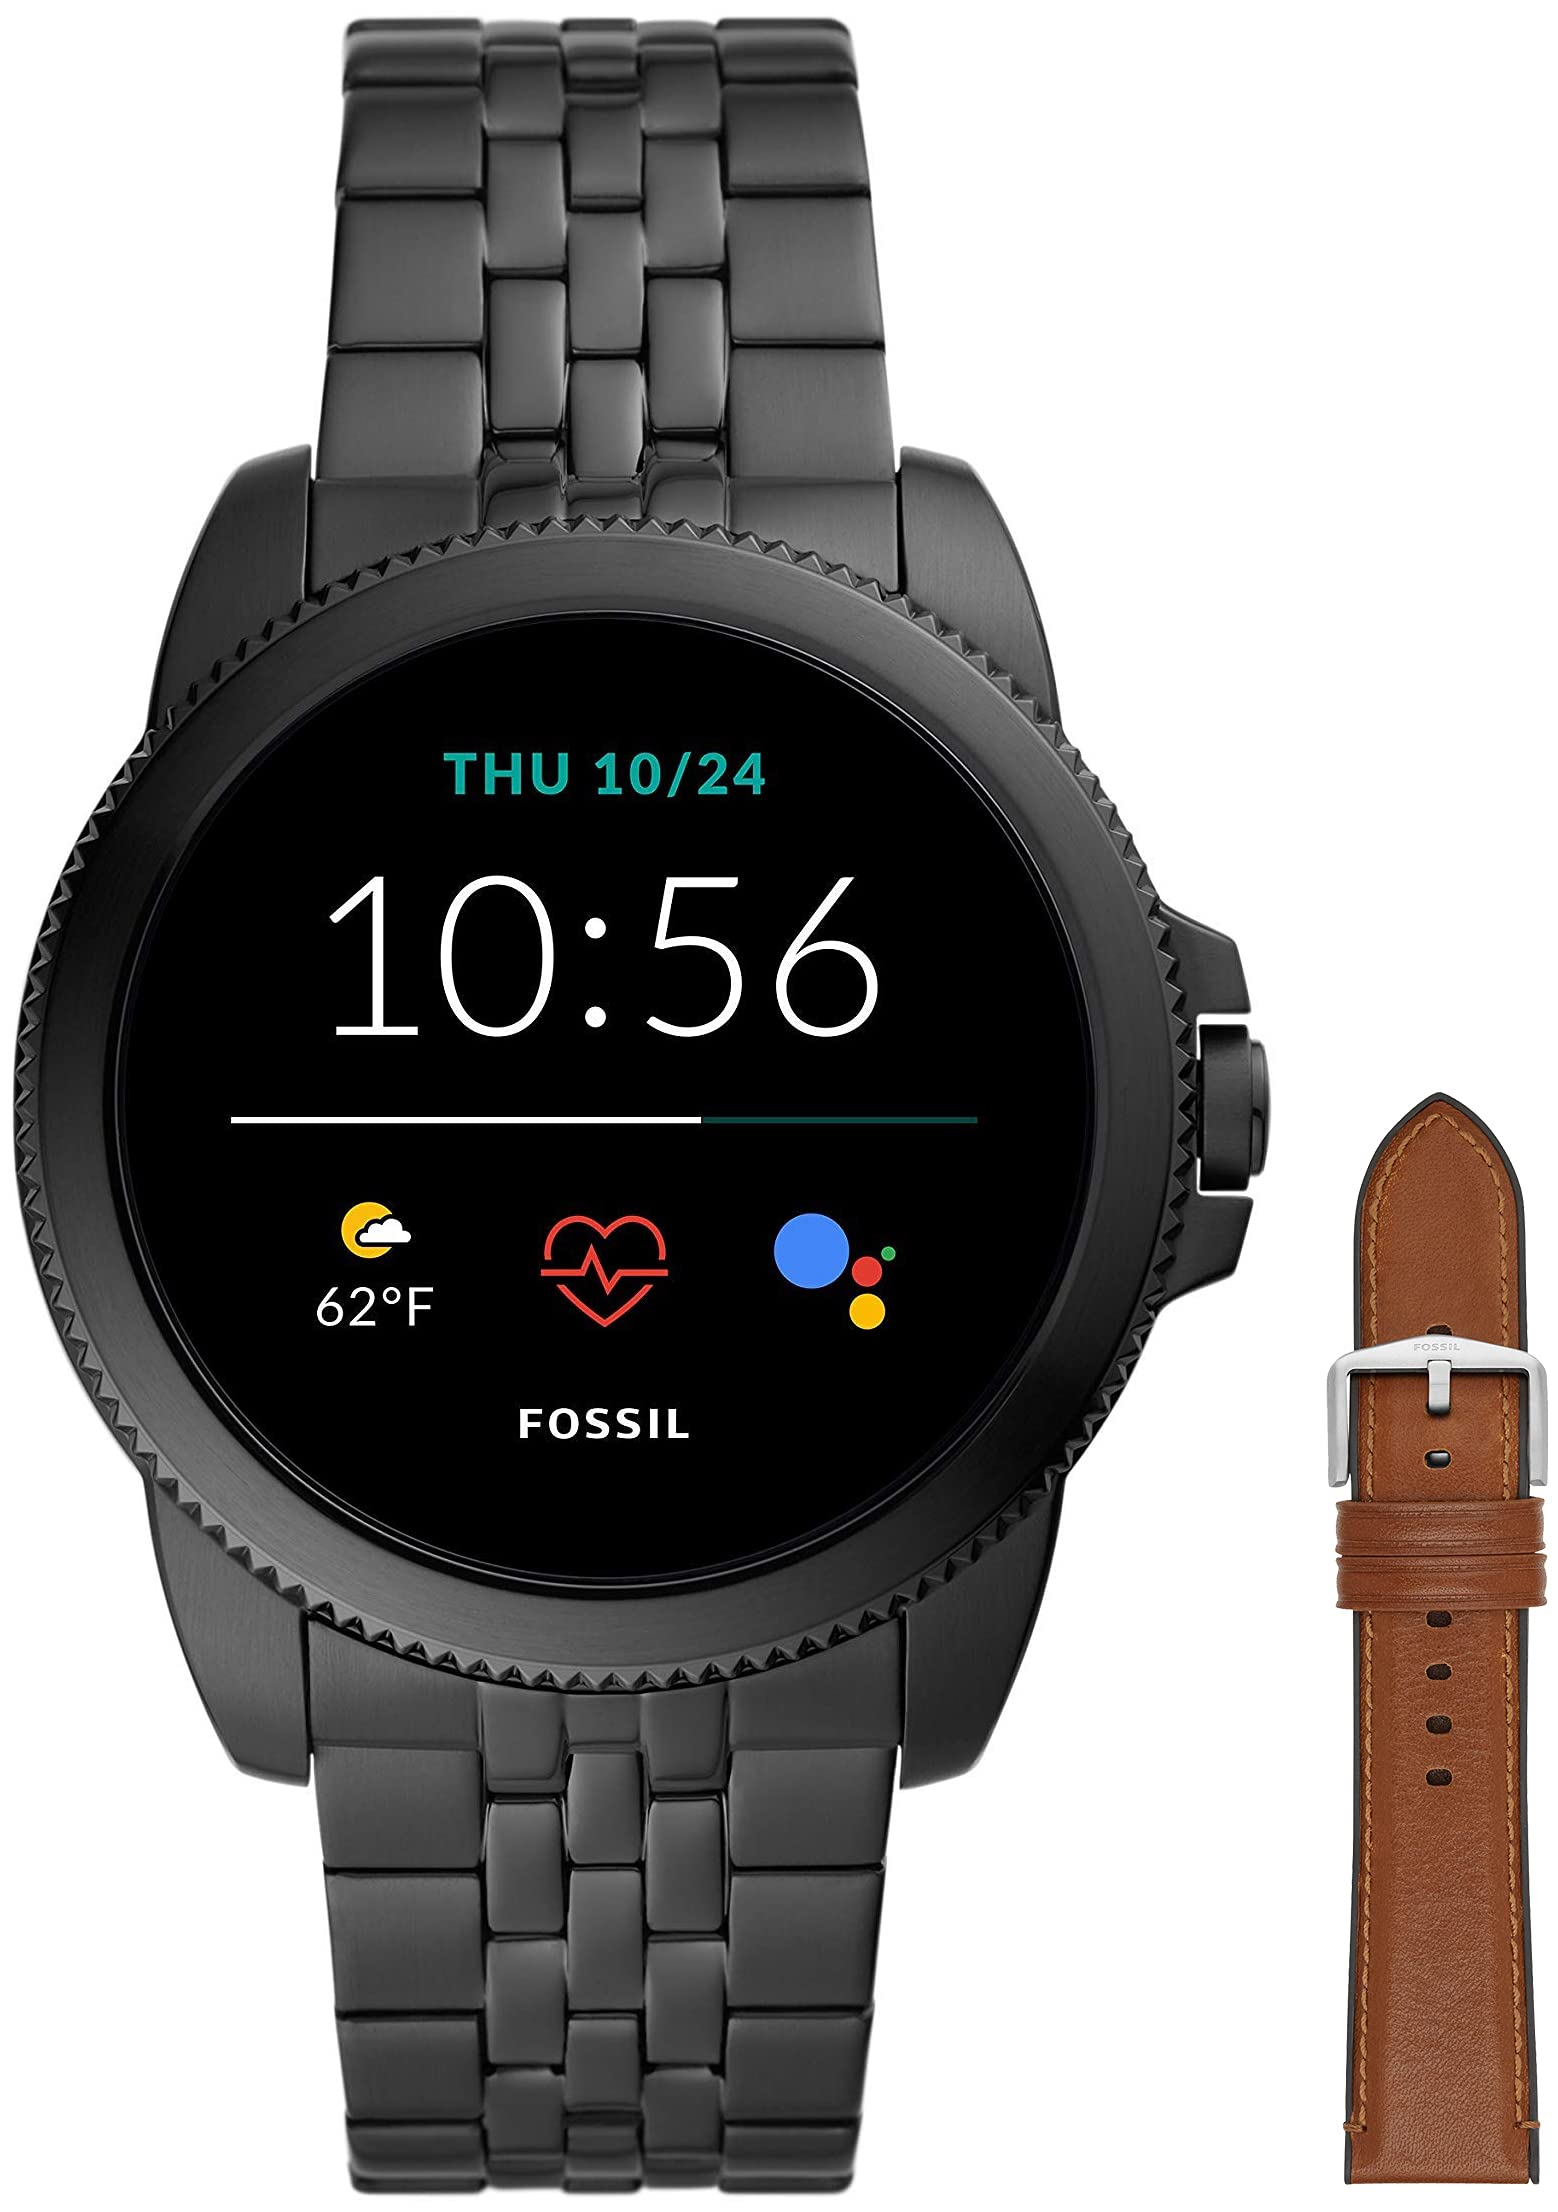 Fossil Men Gen 5E Touchscreen Smartwatch + Fossil Men's Leather Watch Strap S221300